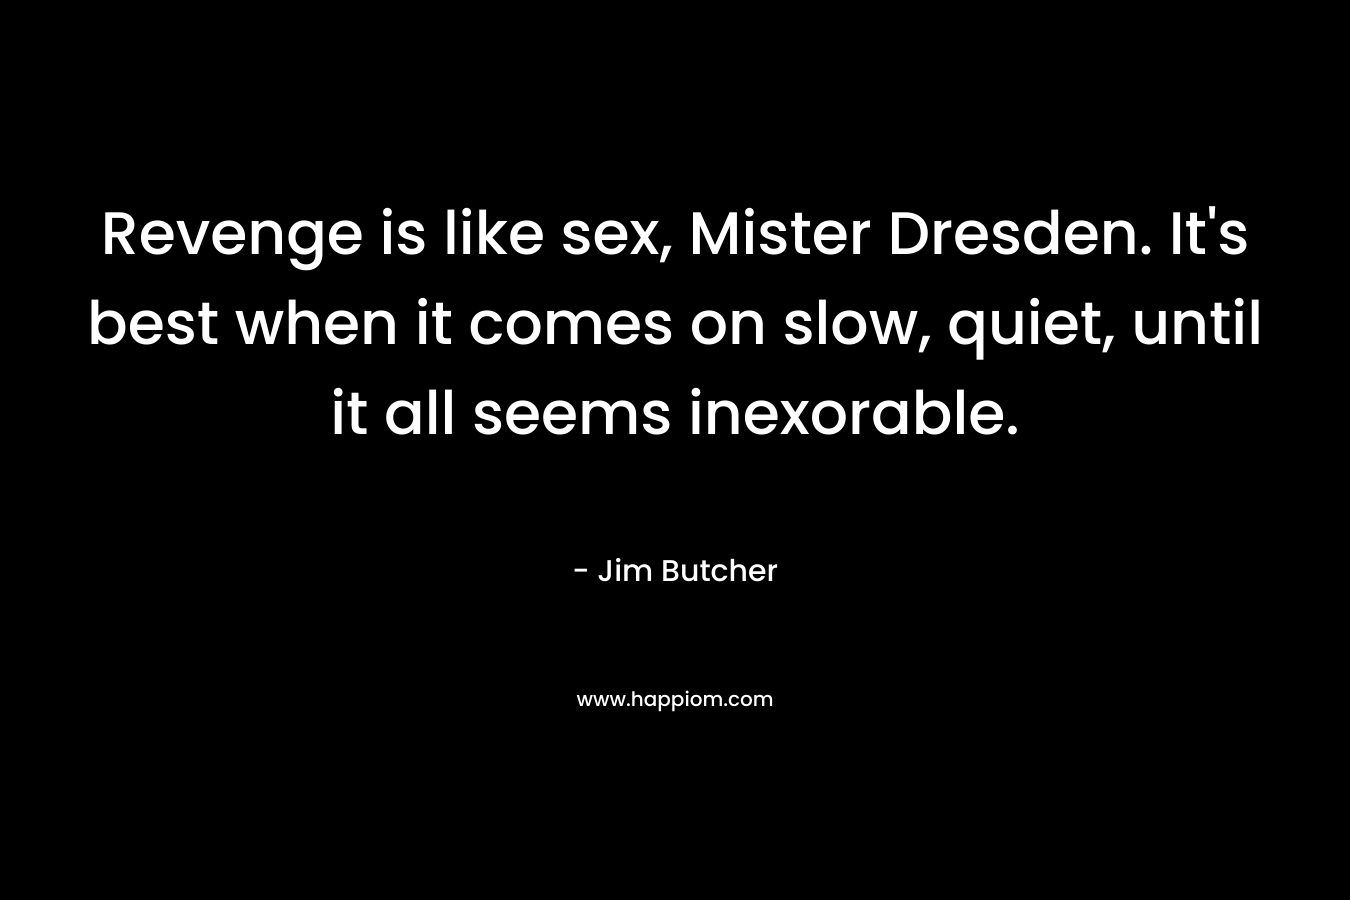 Revenge is like sex, Mister Dresden. It’s best when it comes on slow, quiet, until it all seems inexorable. – Jim Butcher